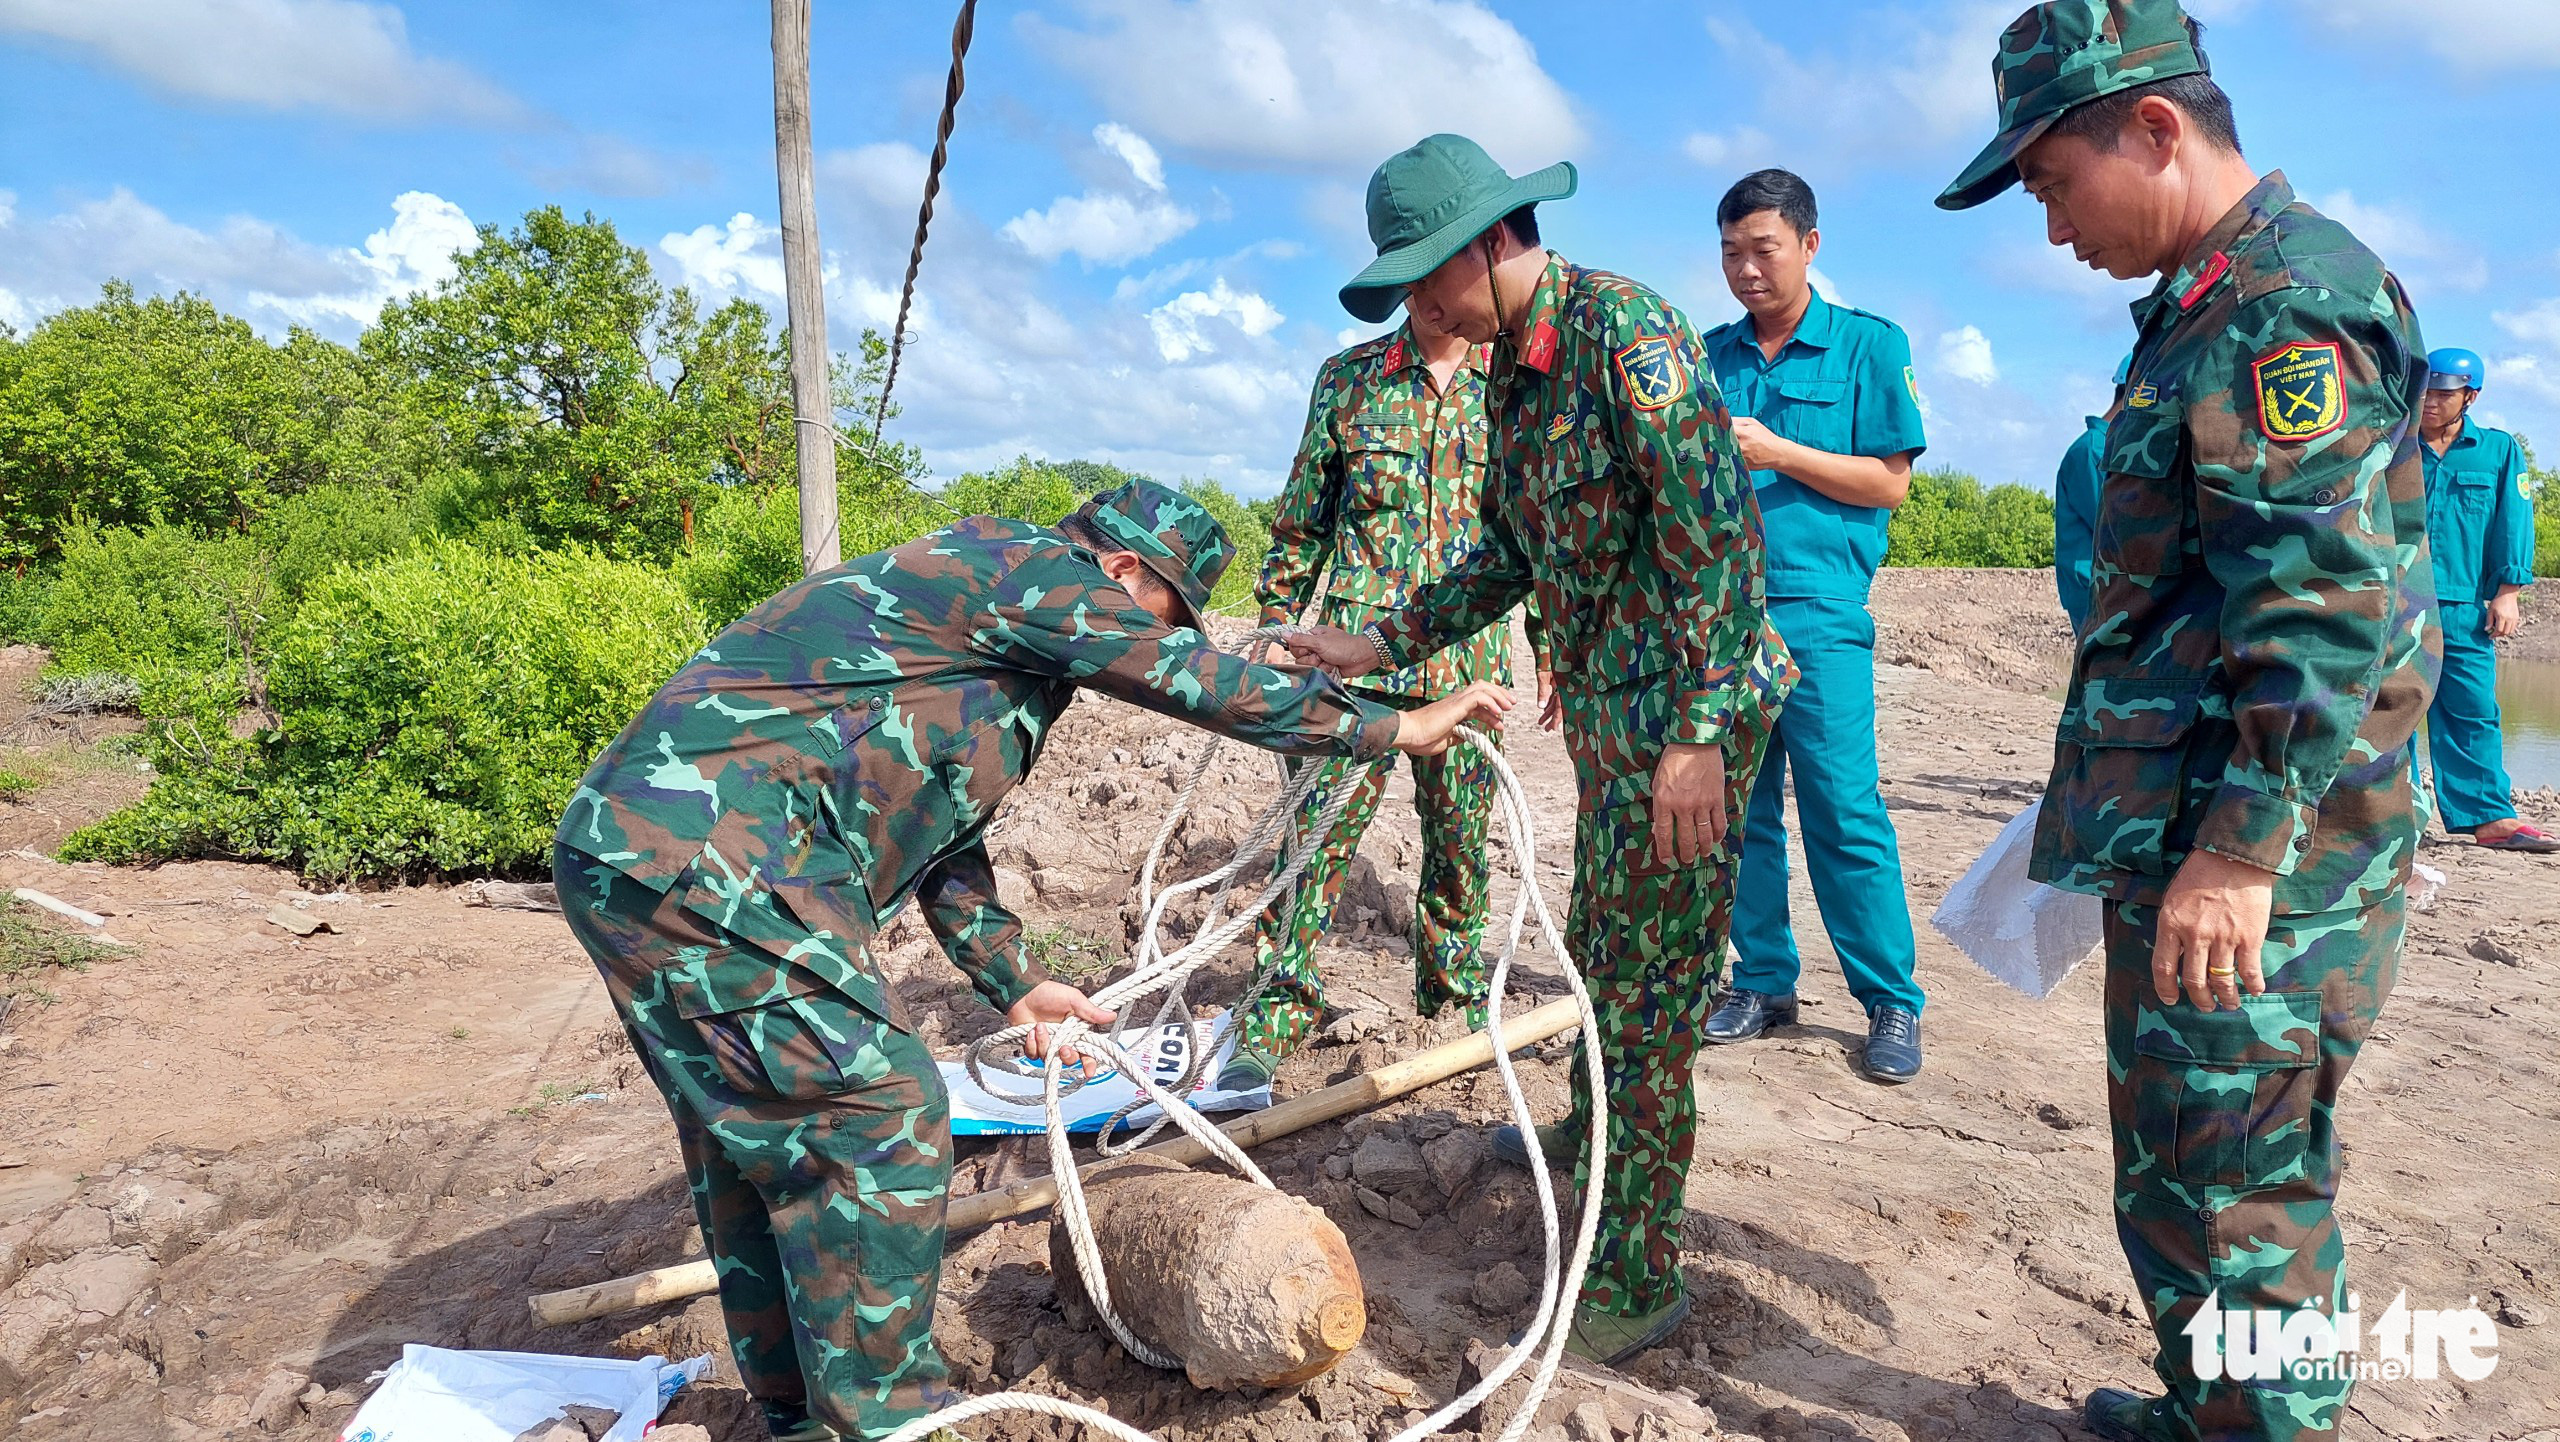 112kg wartime bomb found in shrimp pond in Vietnam’s Mekong Delta